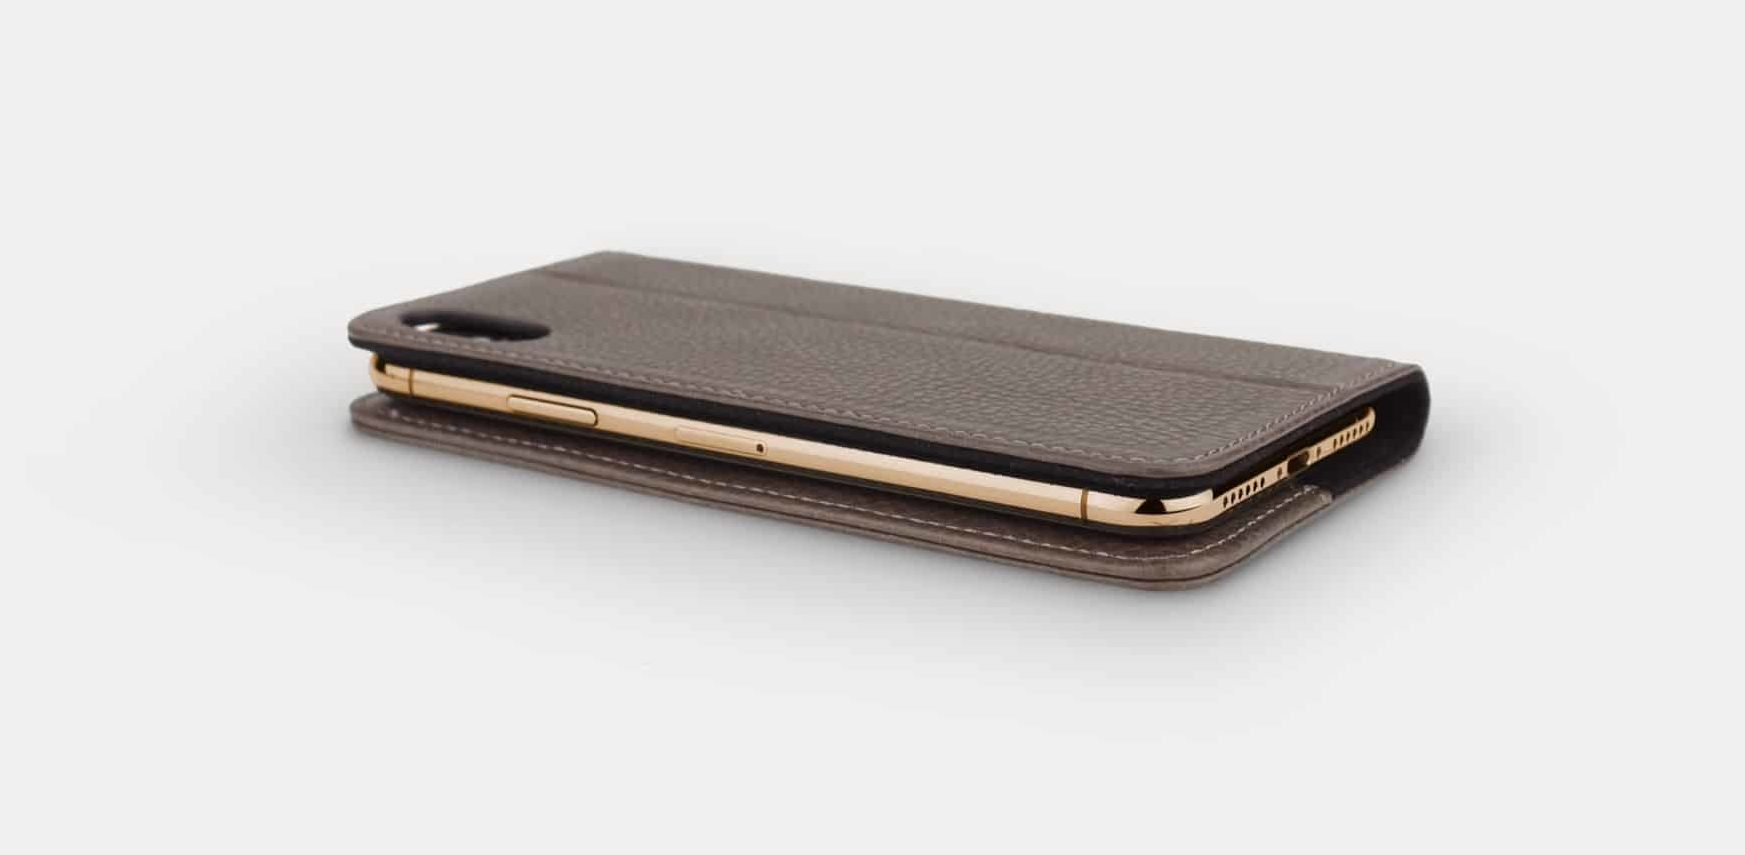 The Nodus Access iPhone XS case doubles as a wallet.